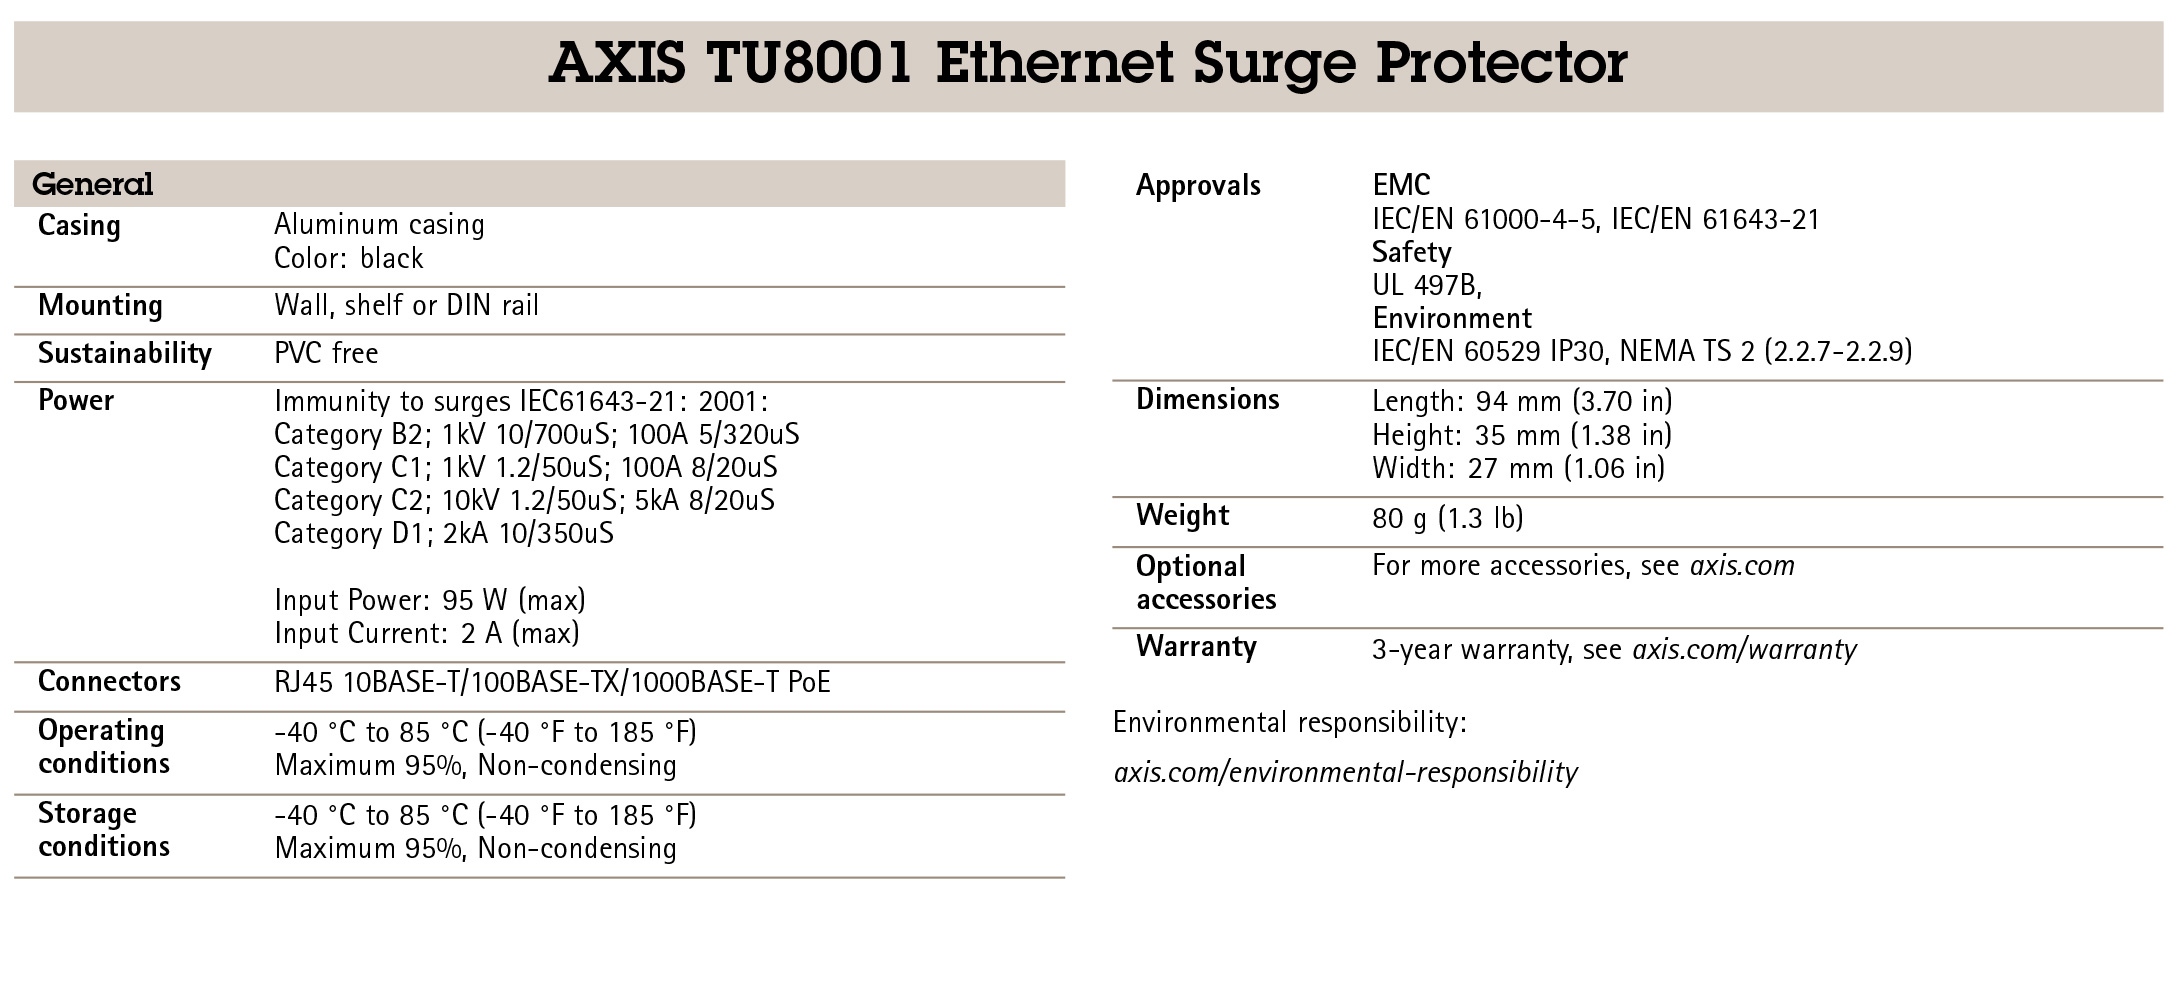 AXIS TU8001 Ethernet Surge Protector